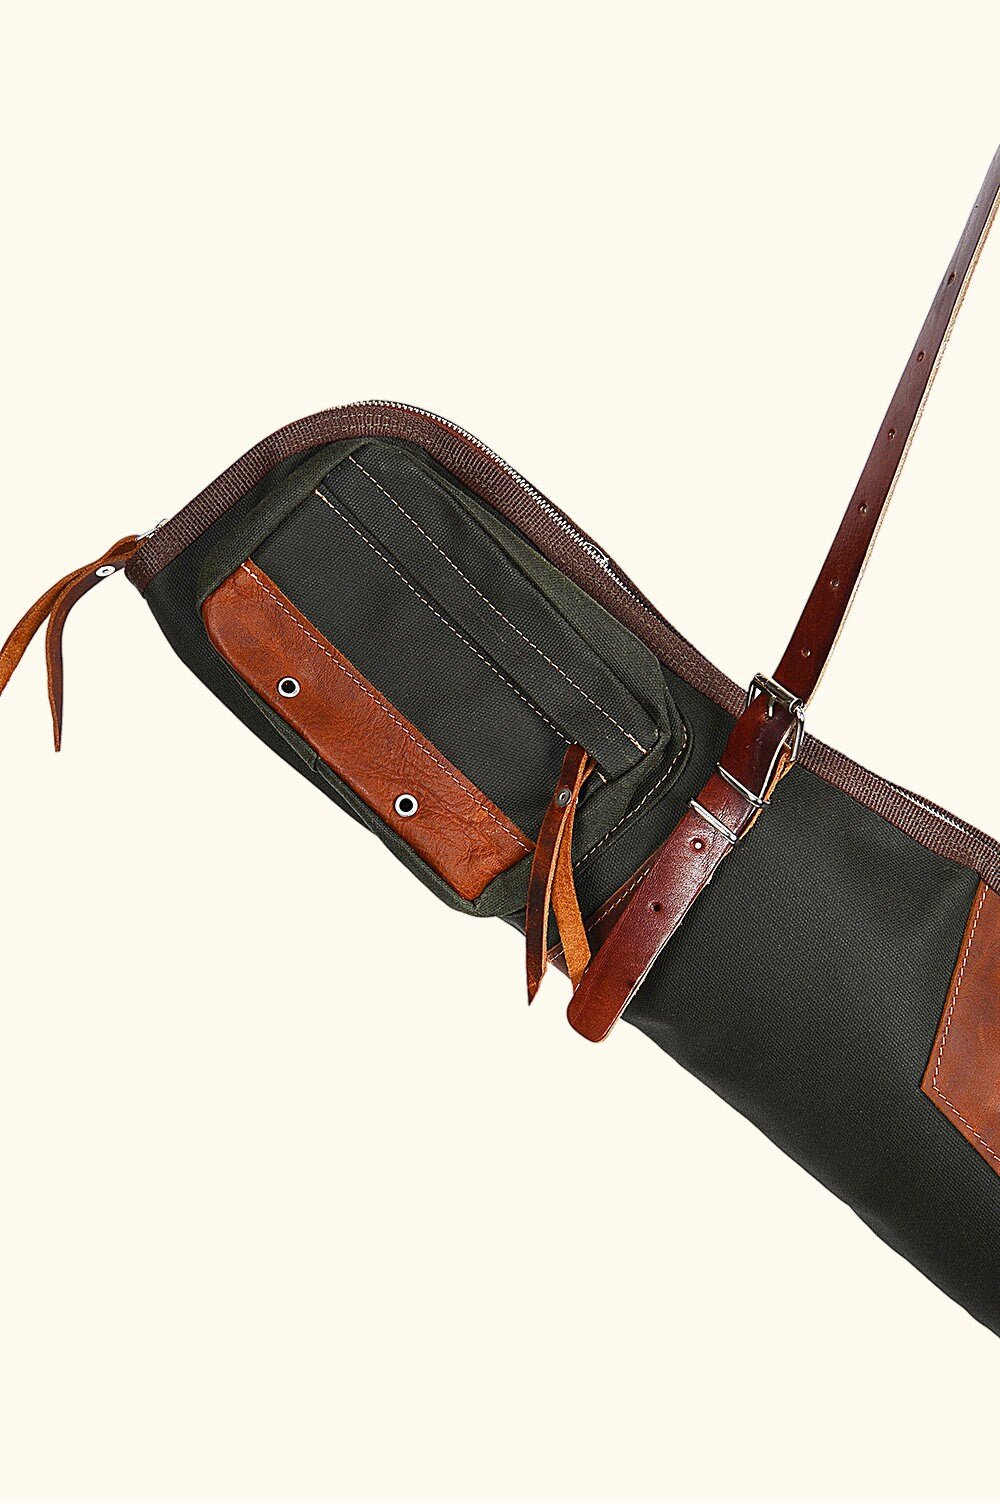 Handmade | Leather Shotgun Bag | Canvas Shotgun Bag | Waxed Canvas  | Leather | Shotgun Bag | Hunting | Shotgun | Gun case | Personalization  99percenthandmade   